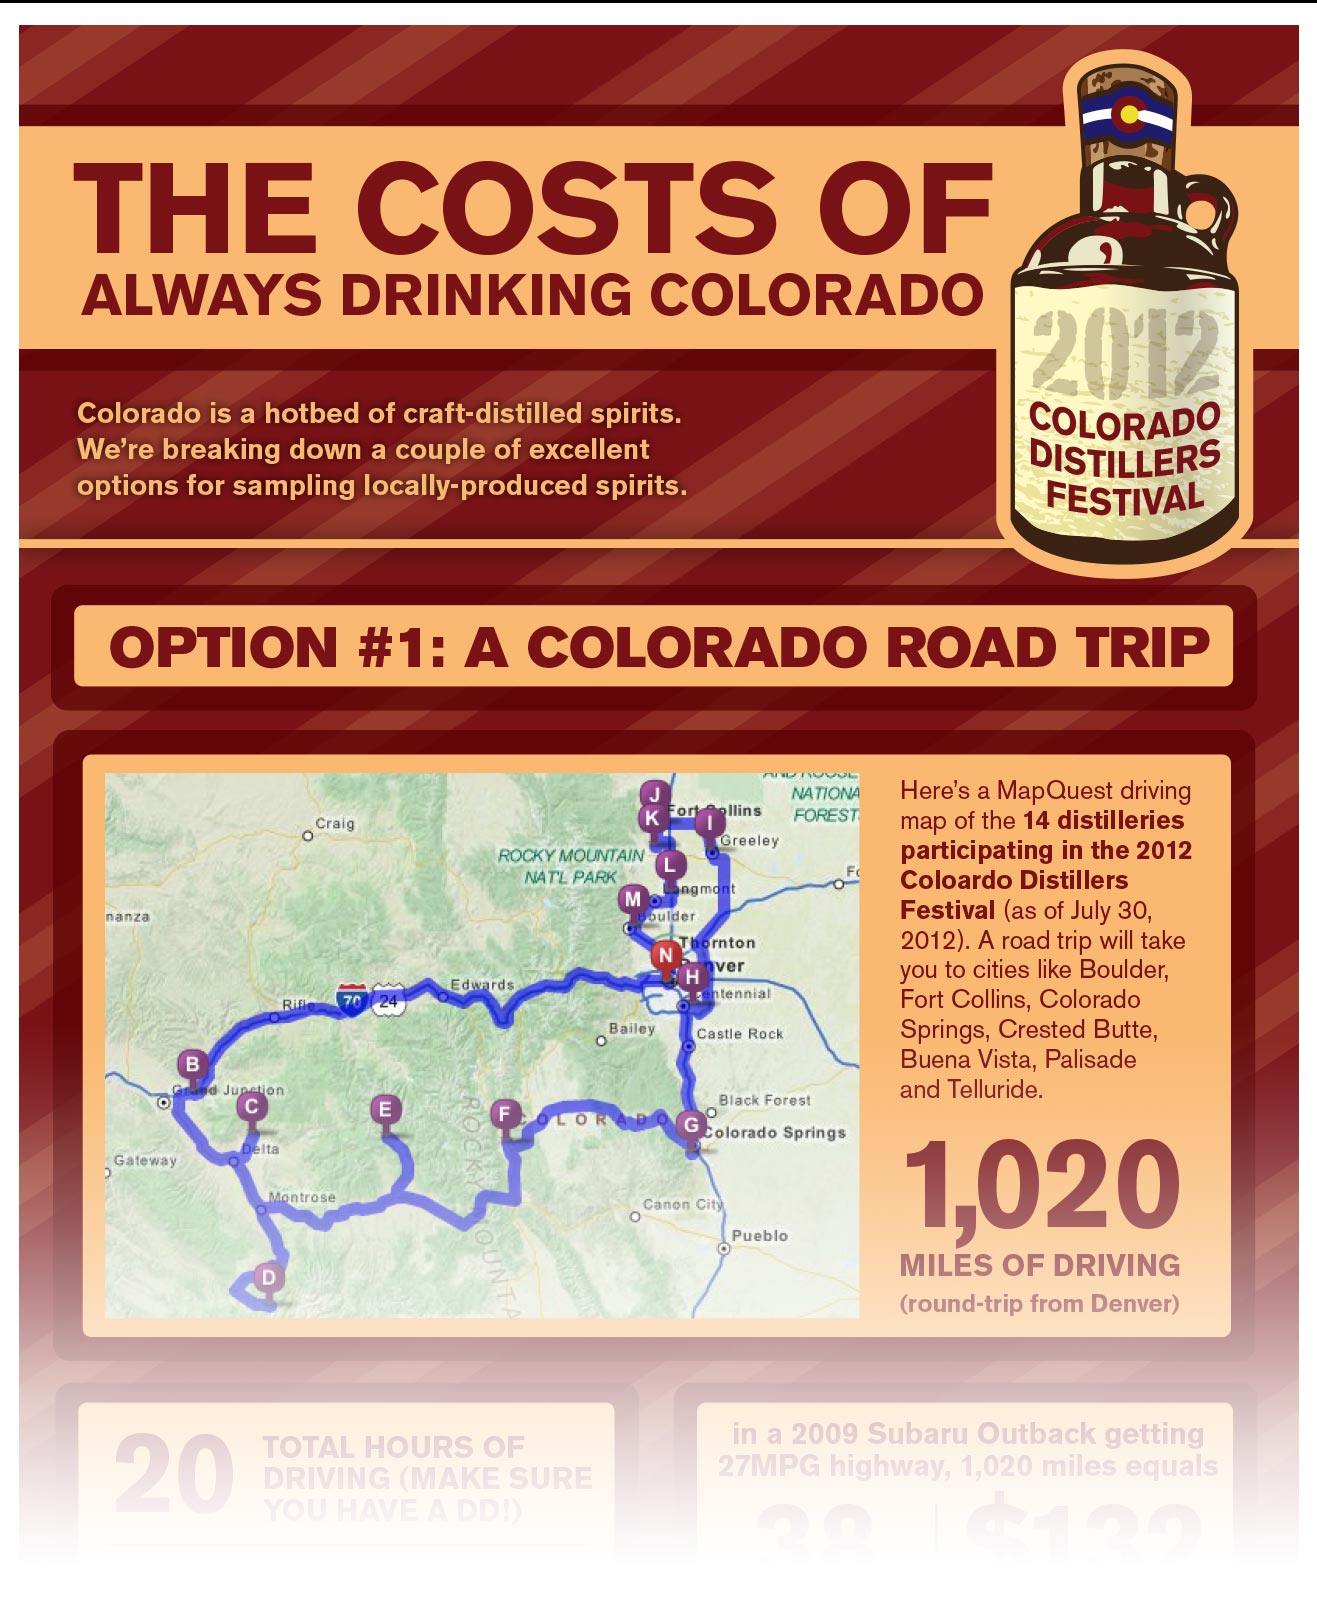 Colorado-Distillers-Festival-2012-Travel-Infographic-Desktop-mobile